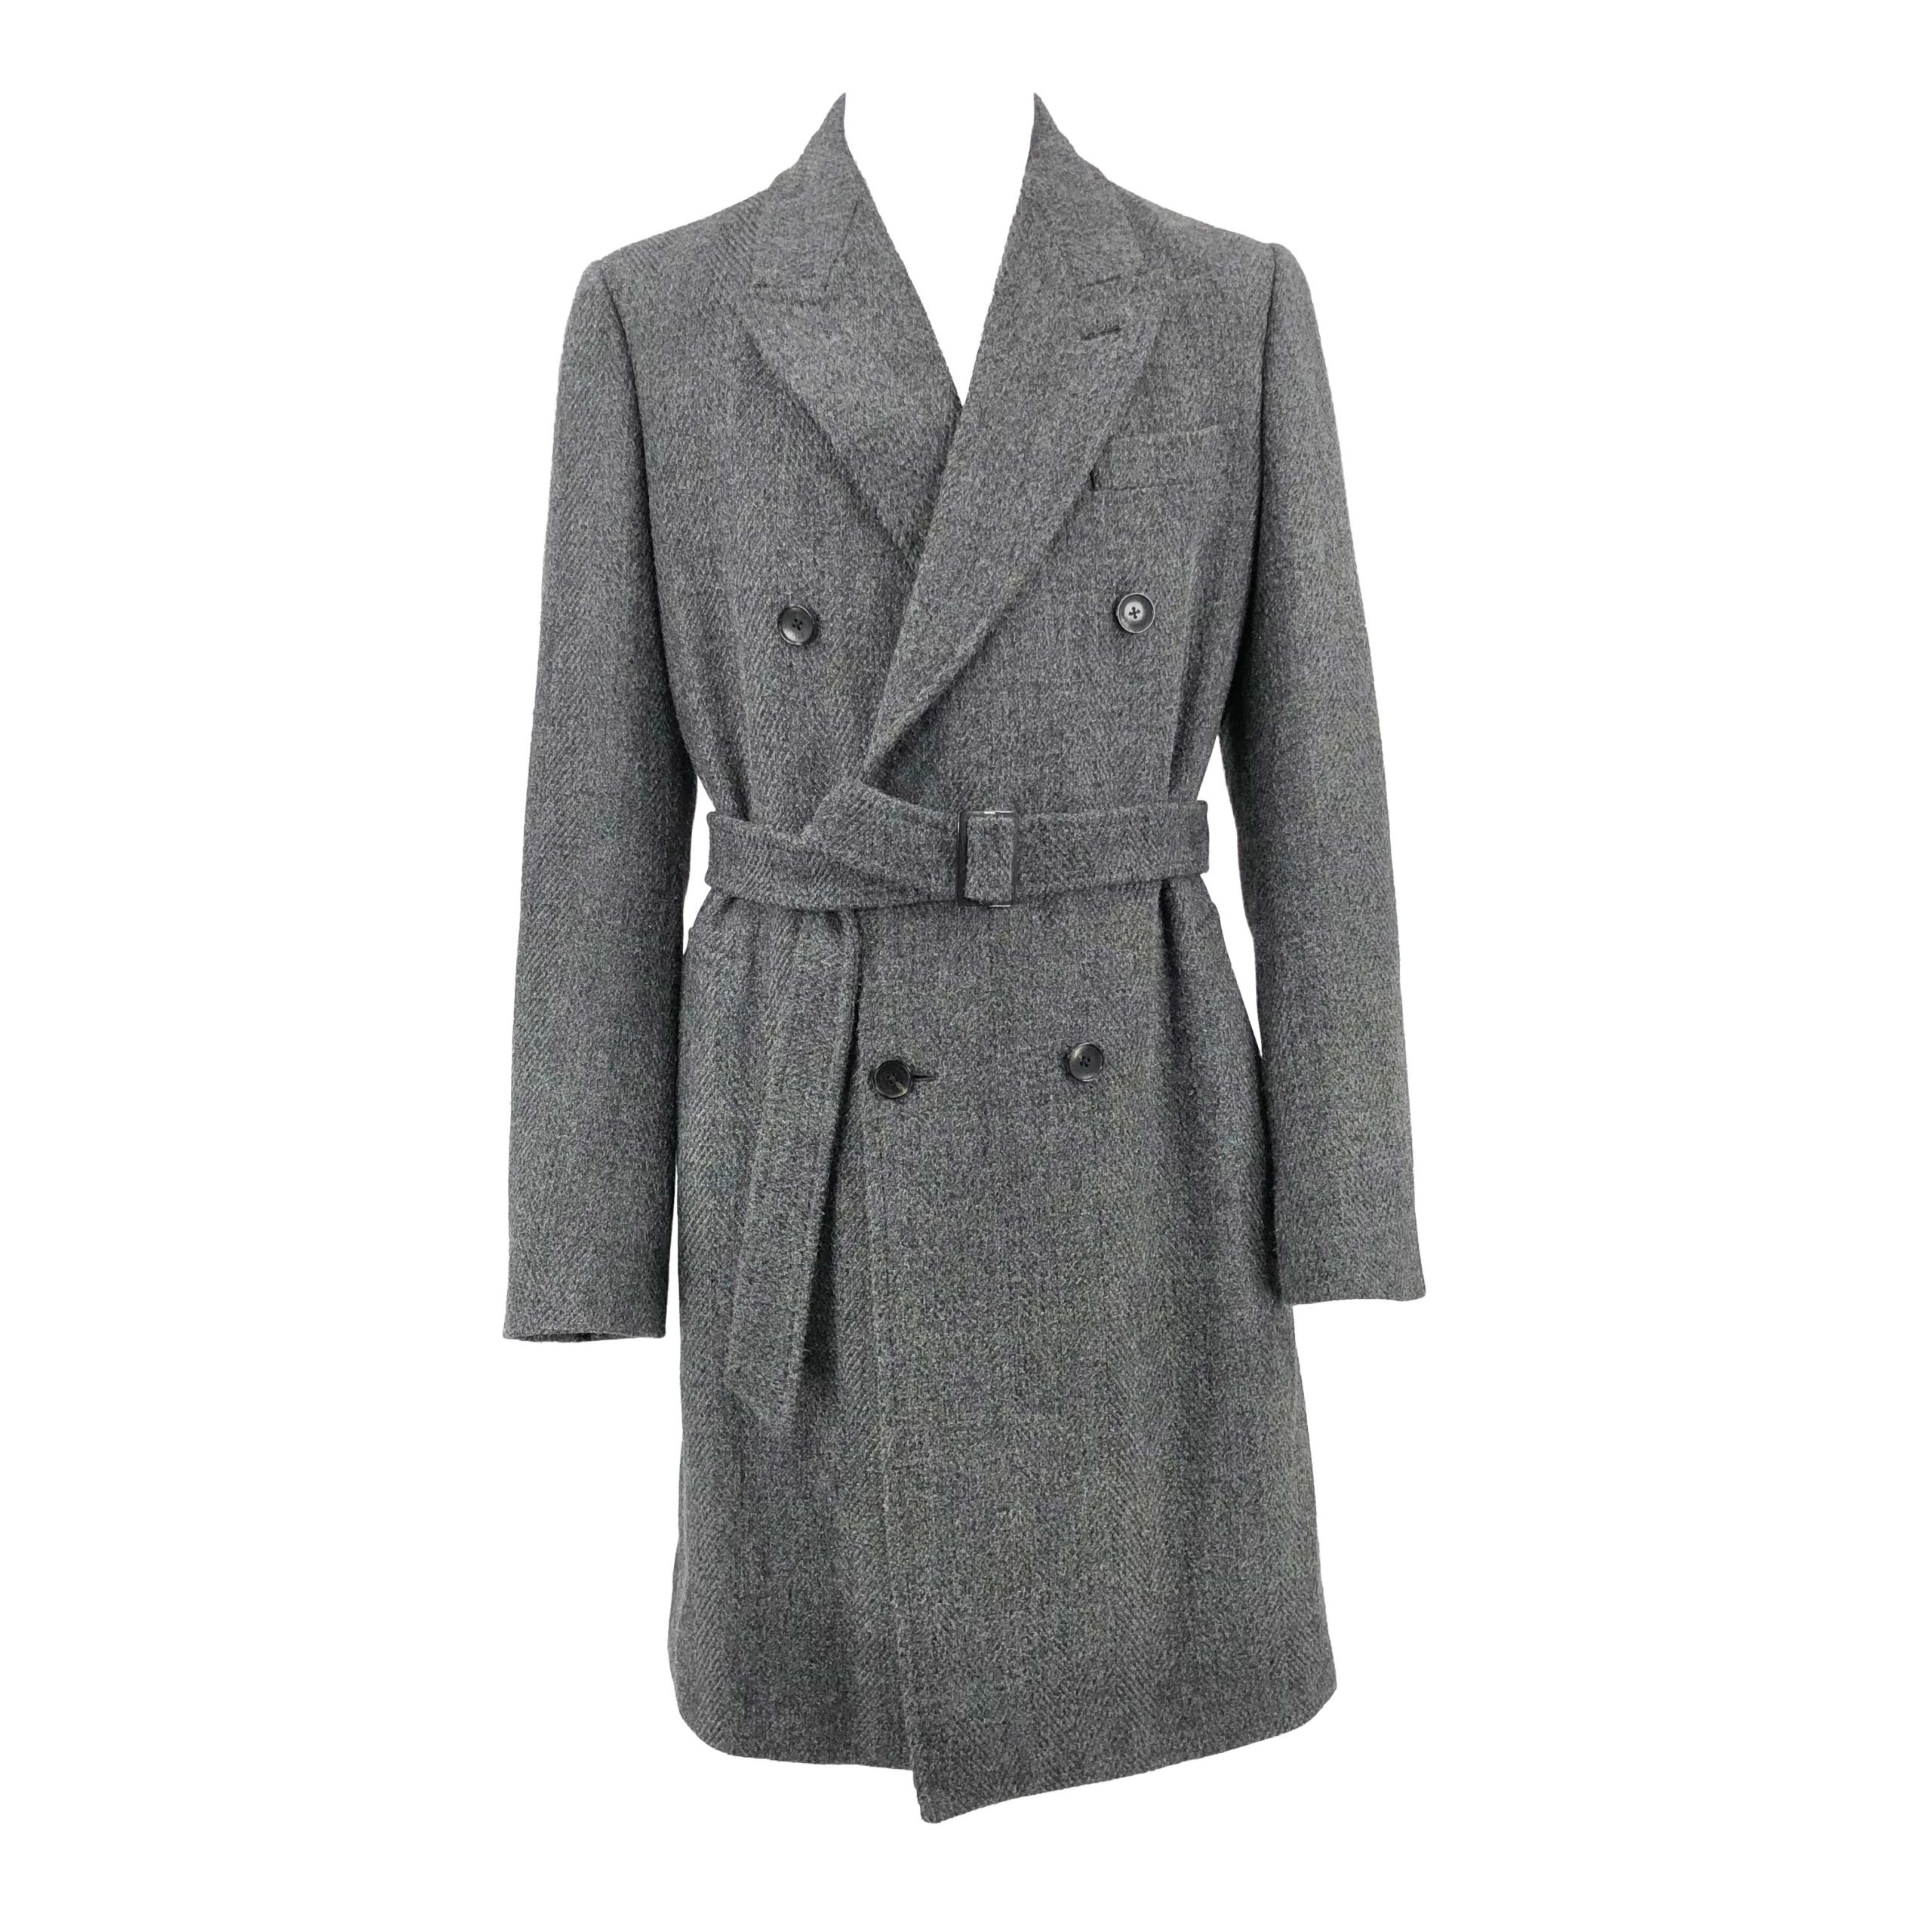 Louis Vuitton coat in grey wool mix - DOWNTOWN UPTOWN Genève